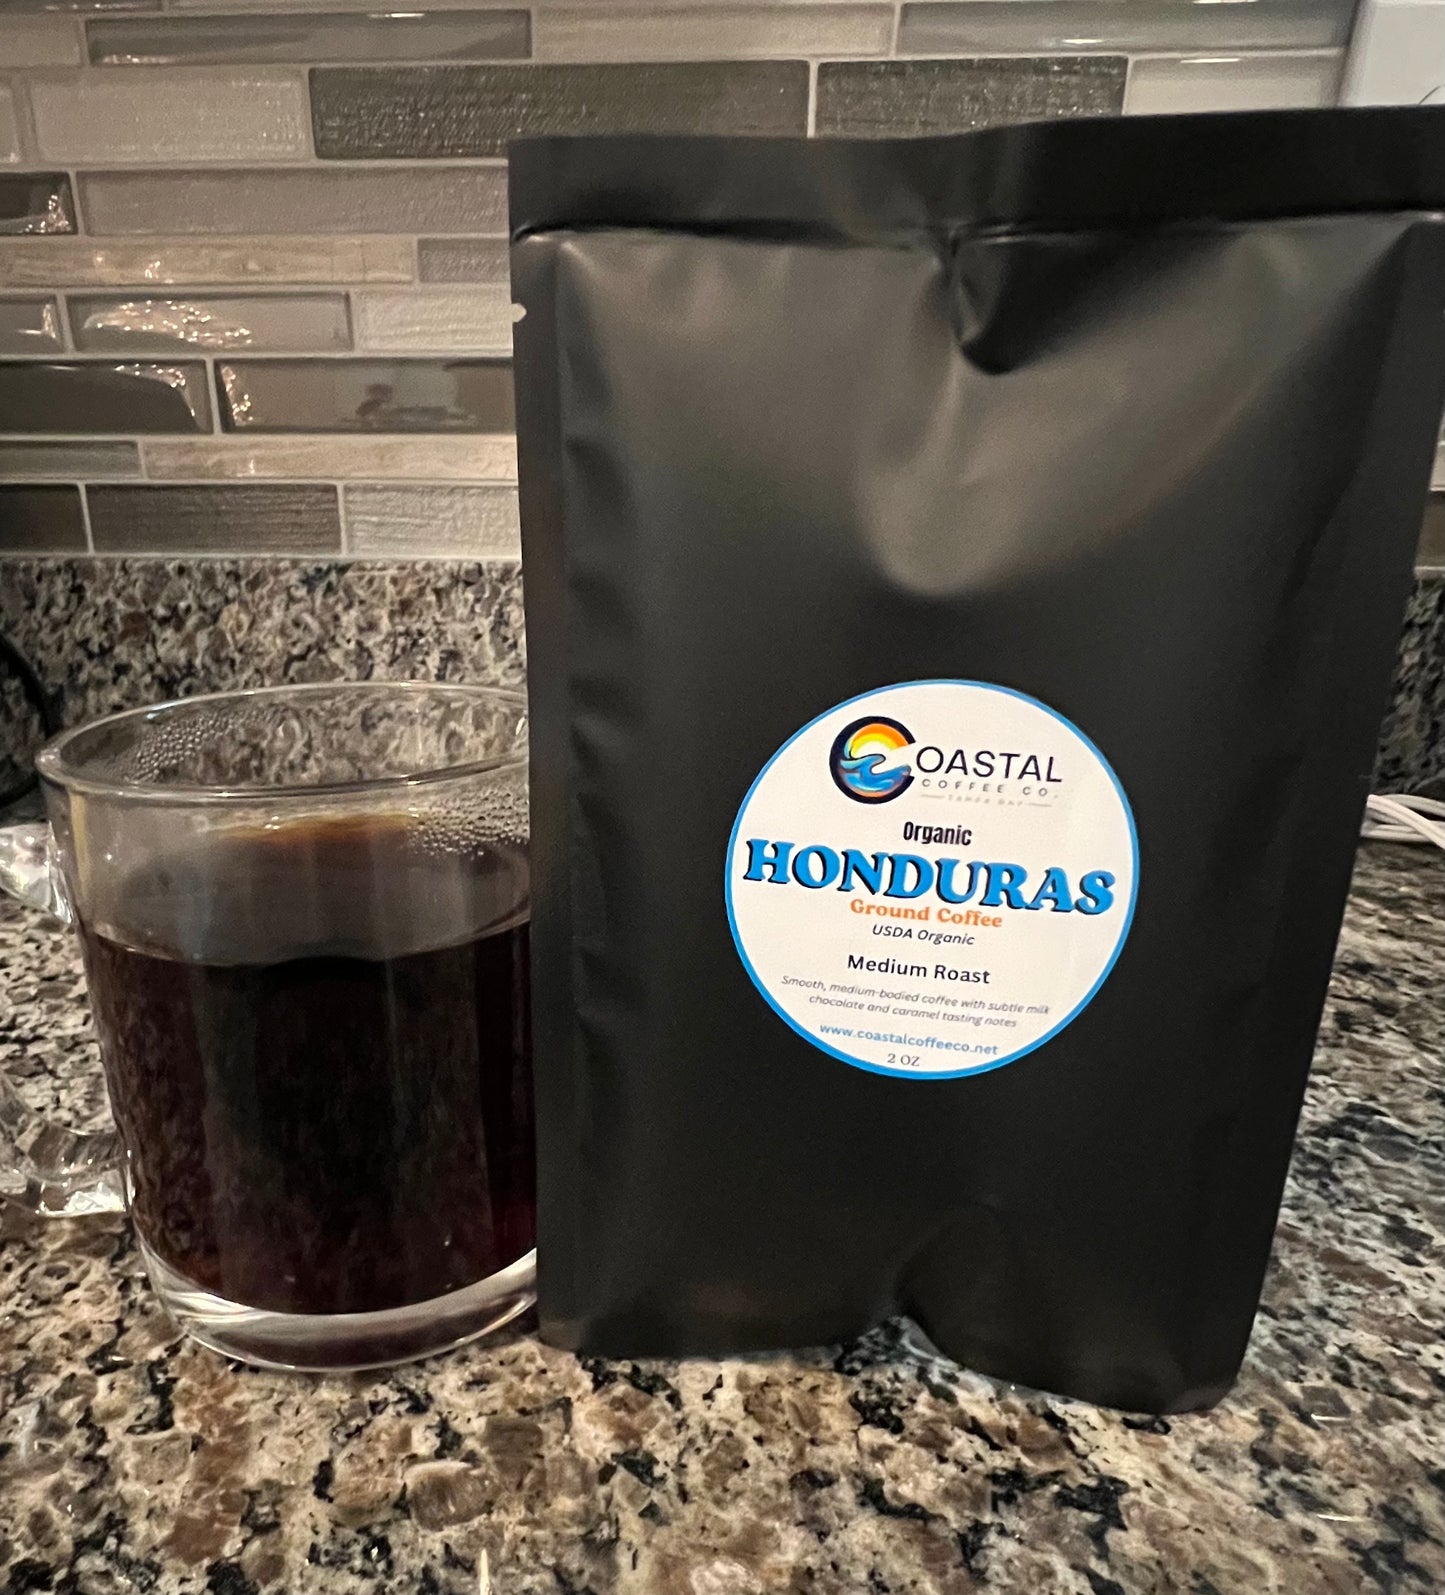 Honduras Coffee - Organic - 2oz sampler